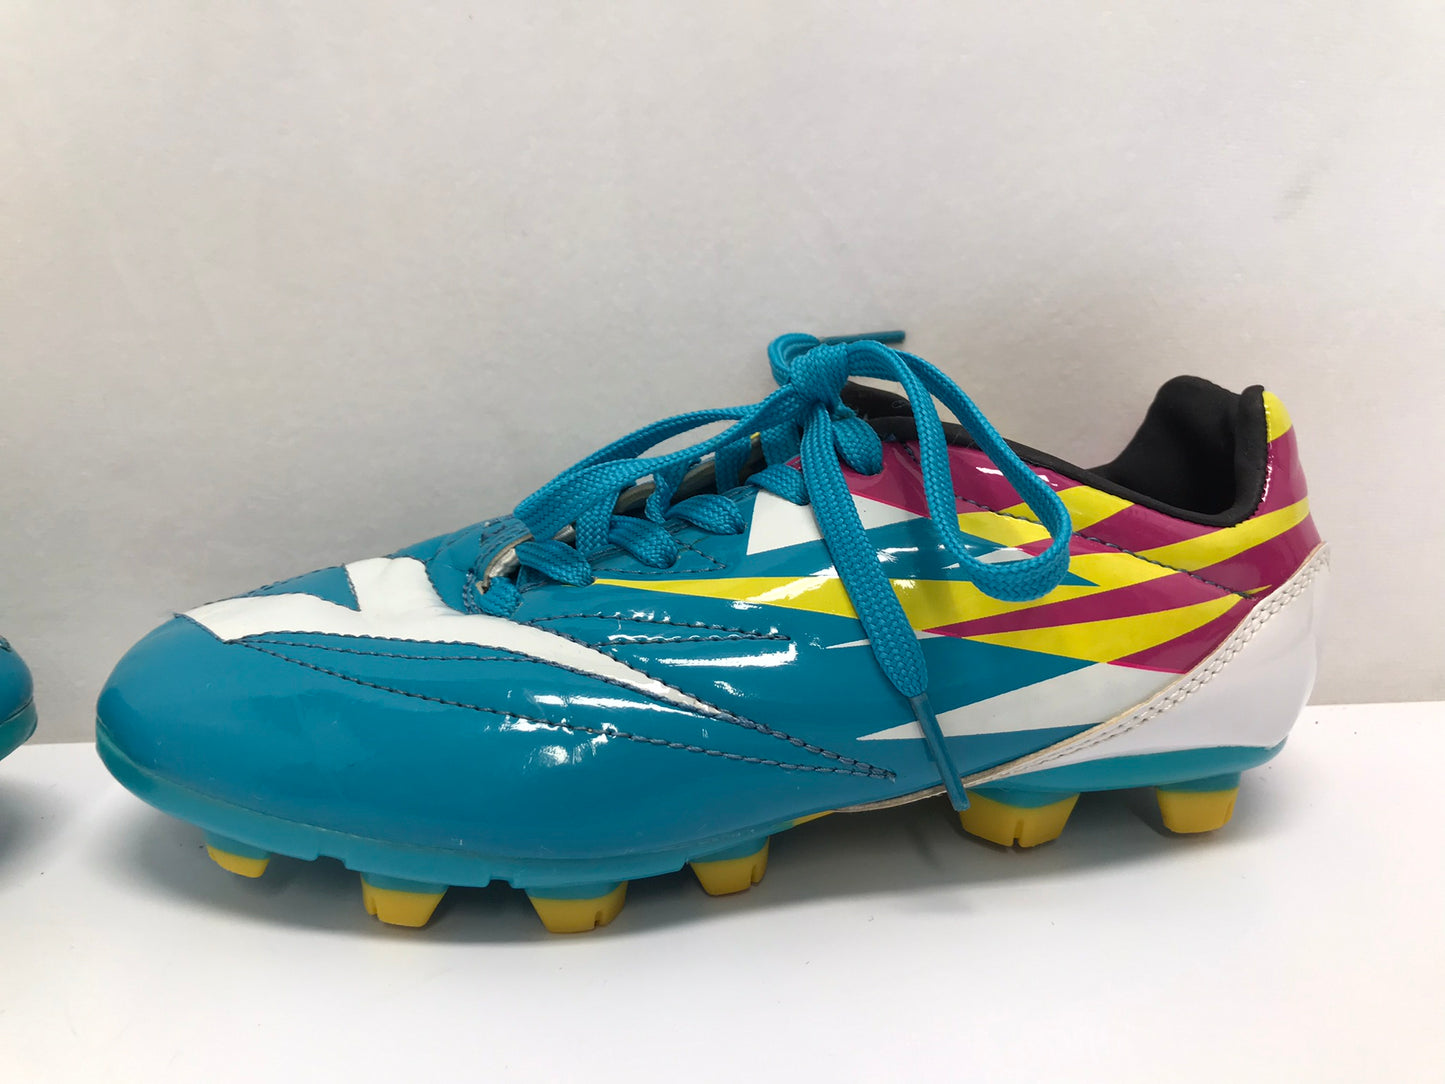 Soccer Shoes Cleats Child Size 5 Diadora Teal Yellow Fushia